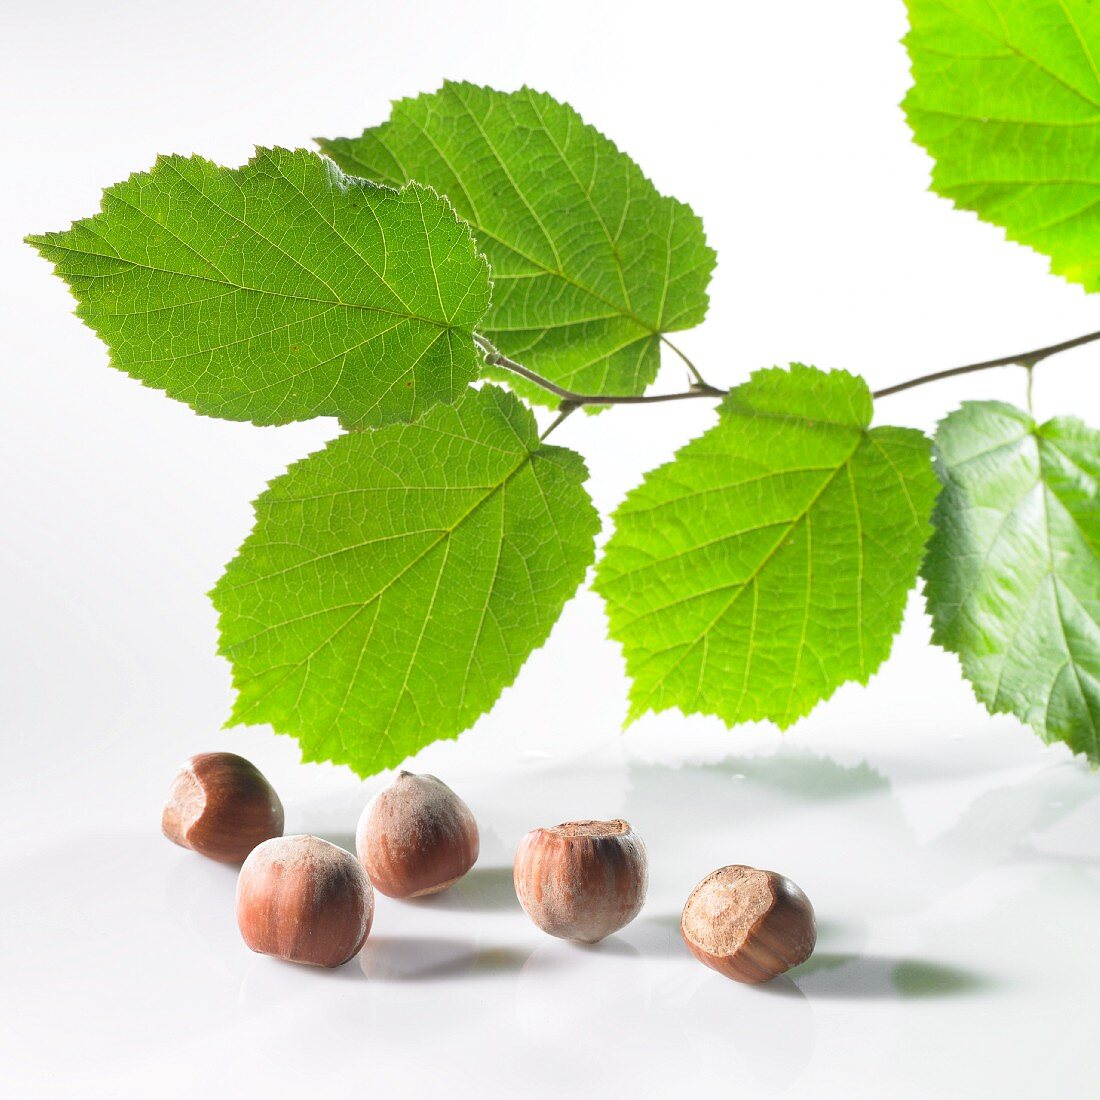 Hazelnuts and hazelnut leaves